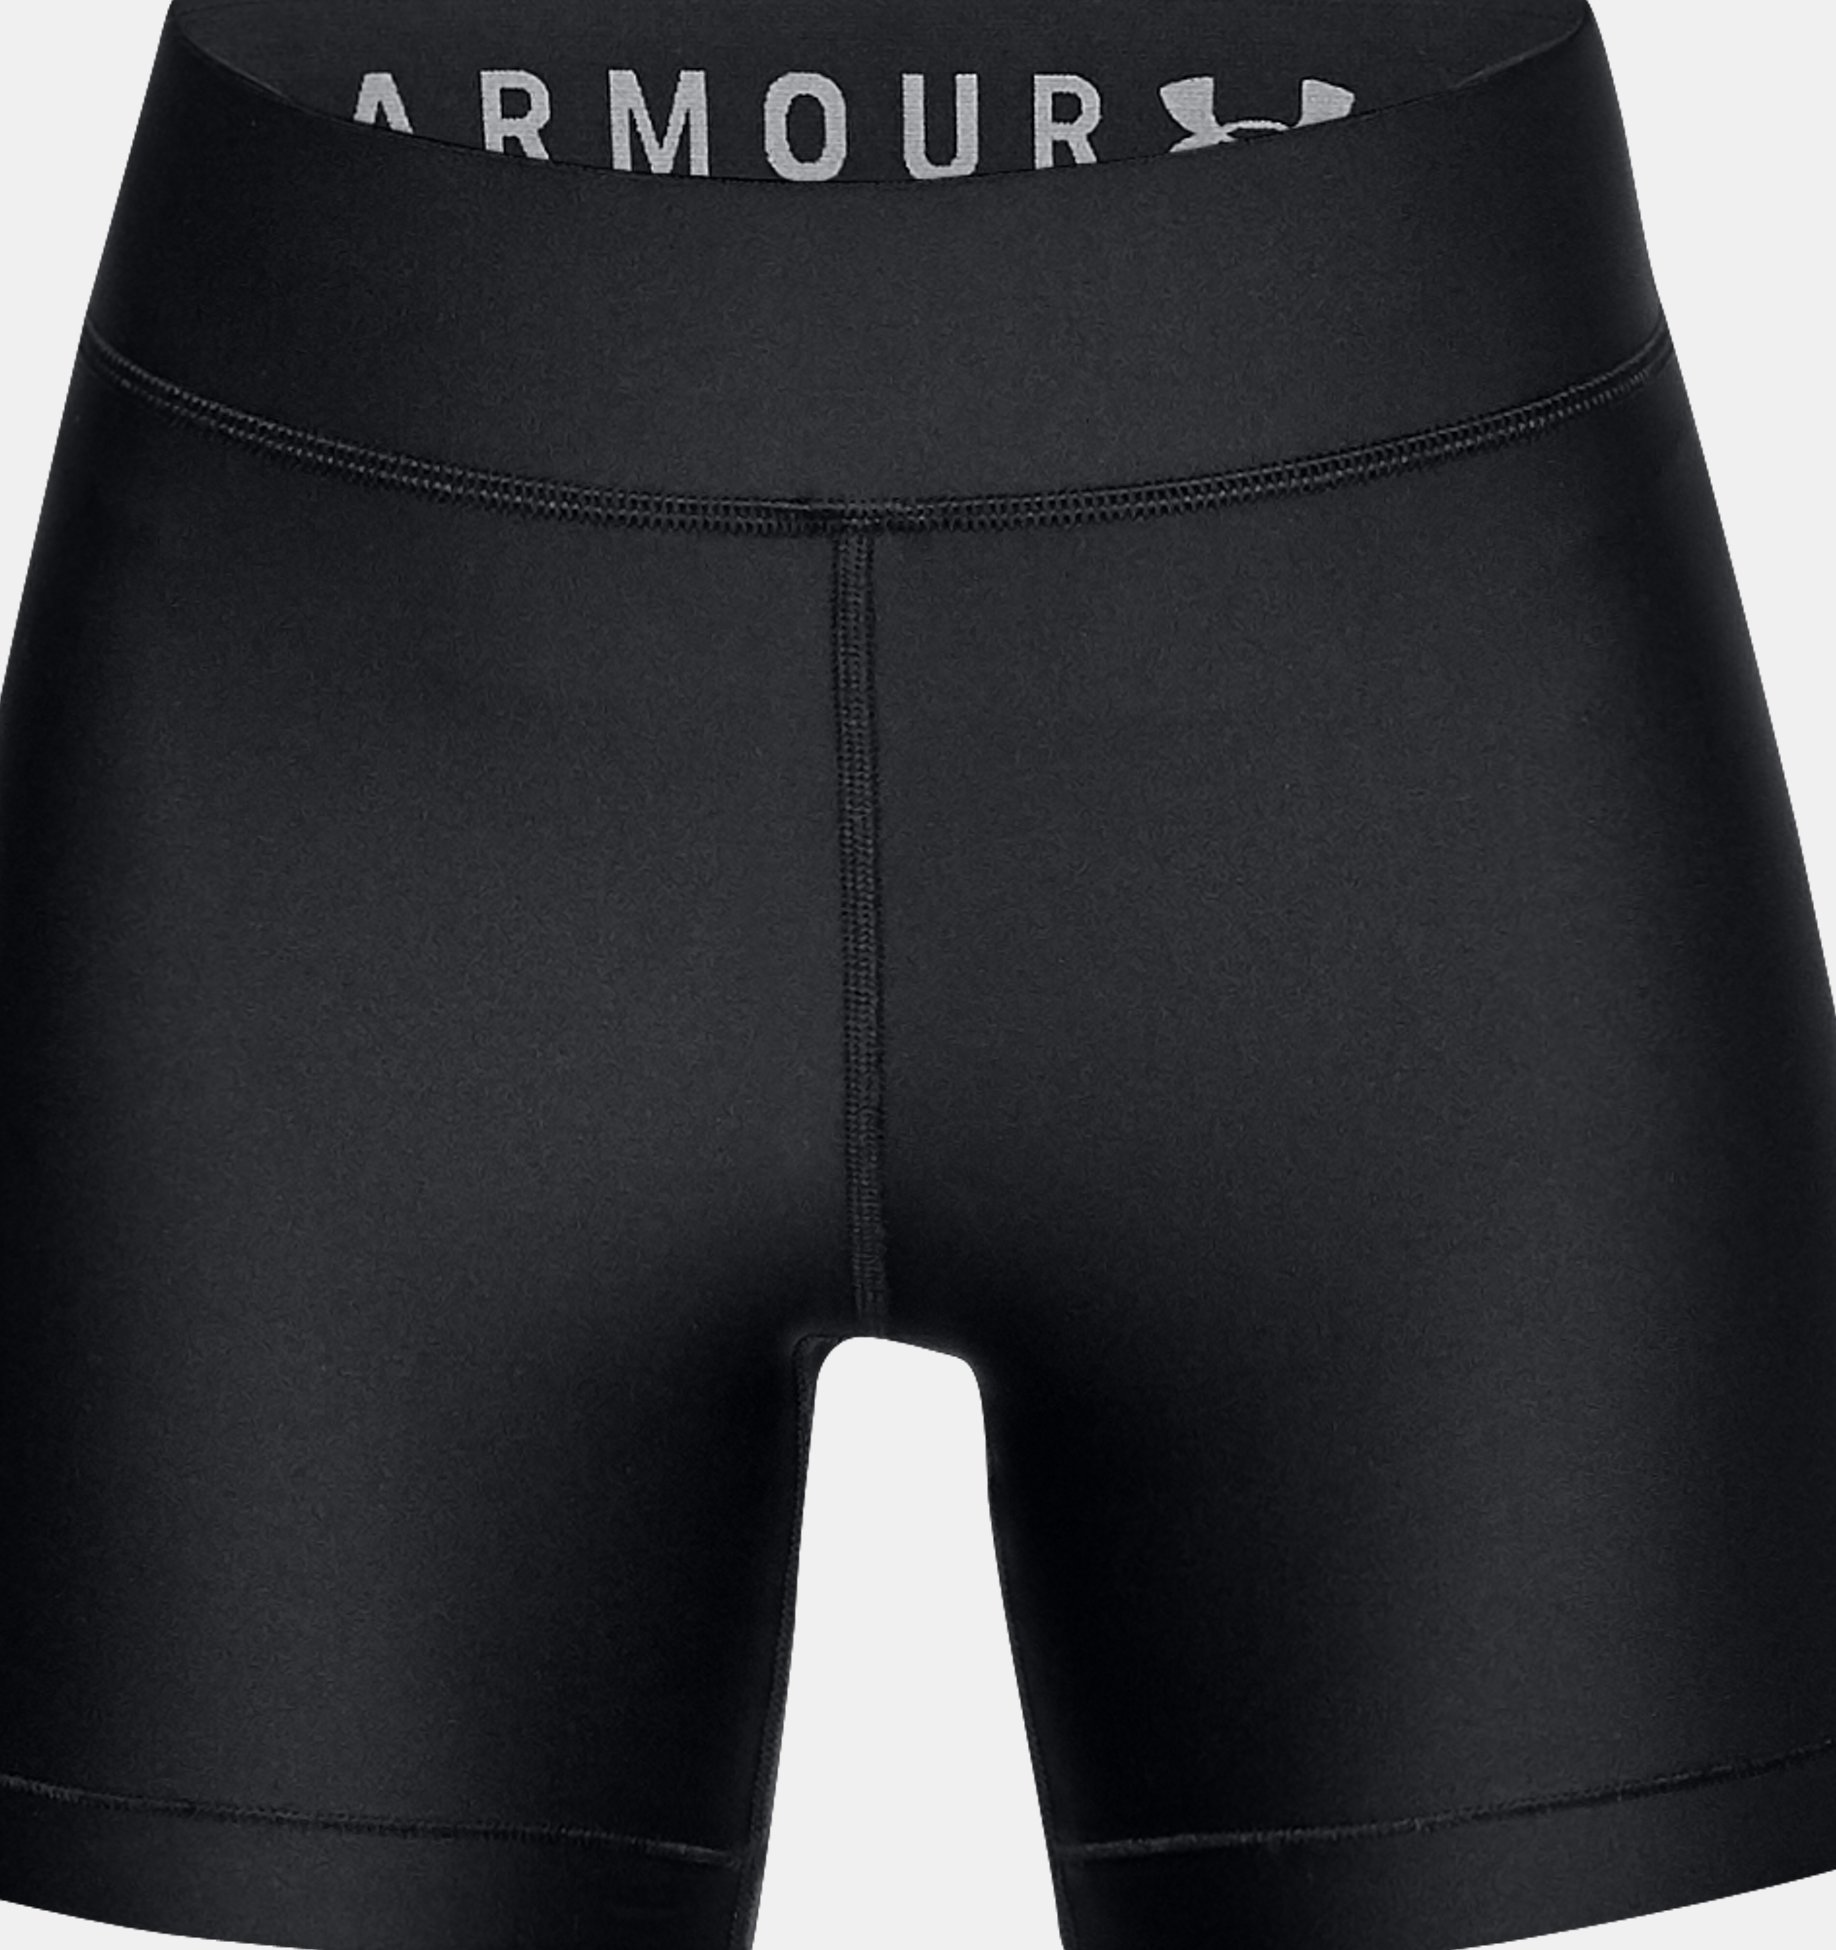 *Under Armour Women's HeatGear Mid Armour 5" Shorts; Megenta Shock; SIZE XS Med 